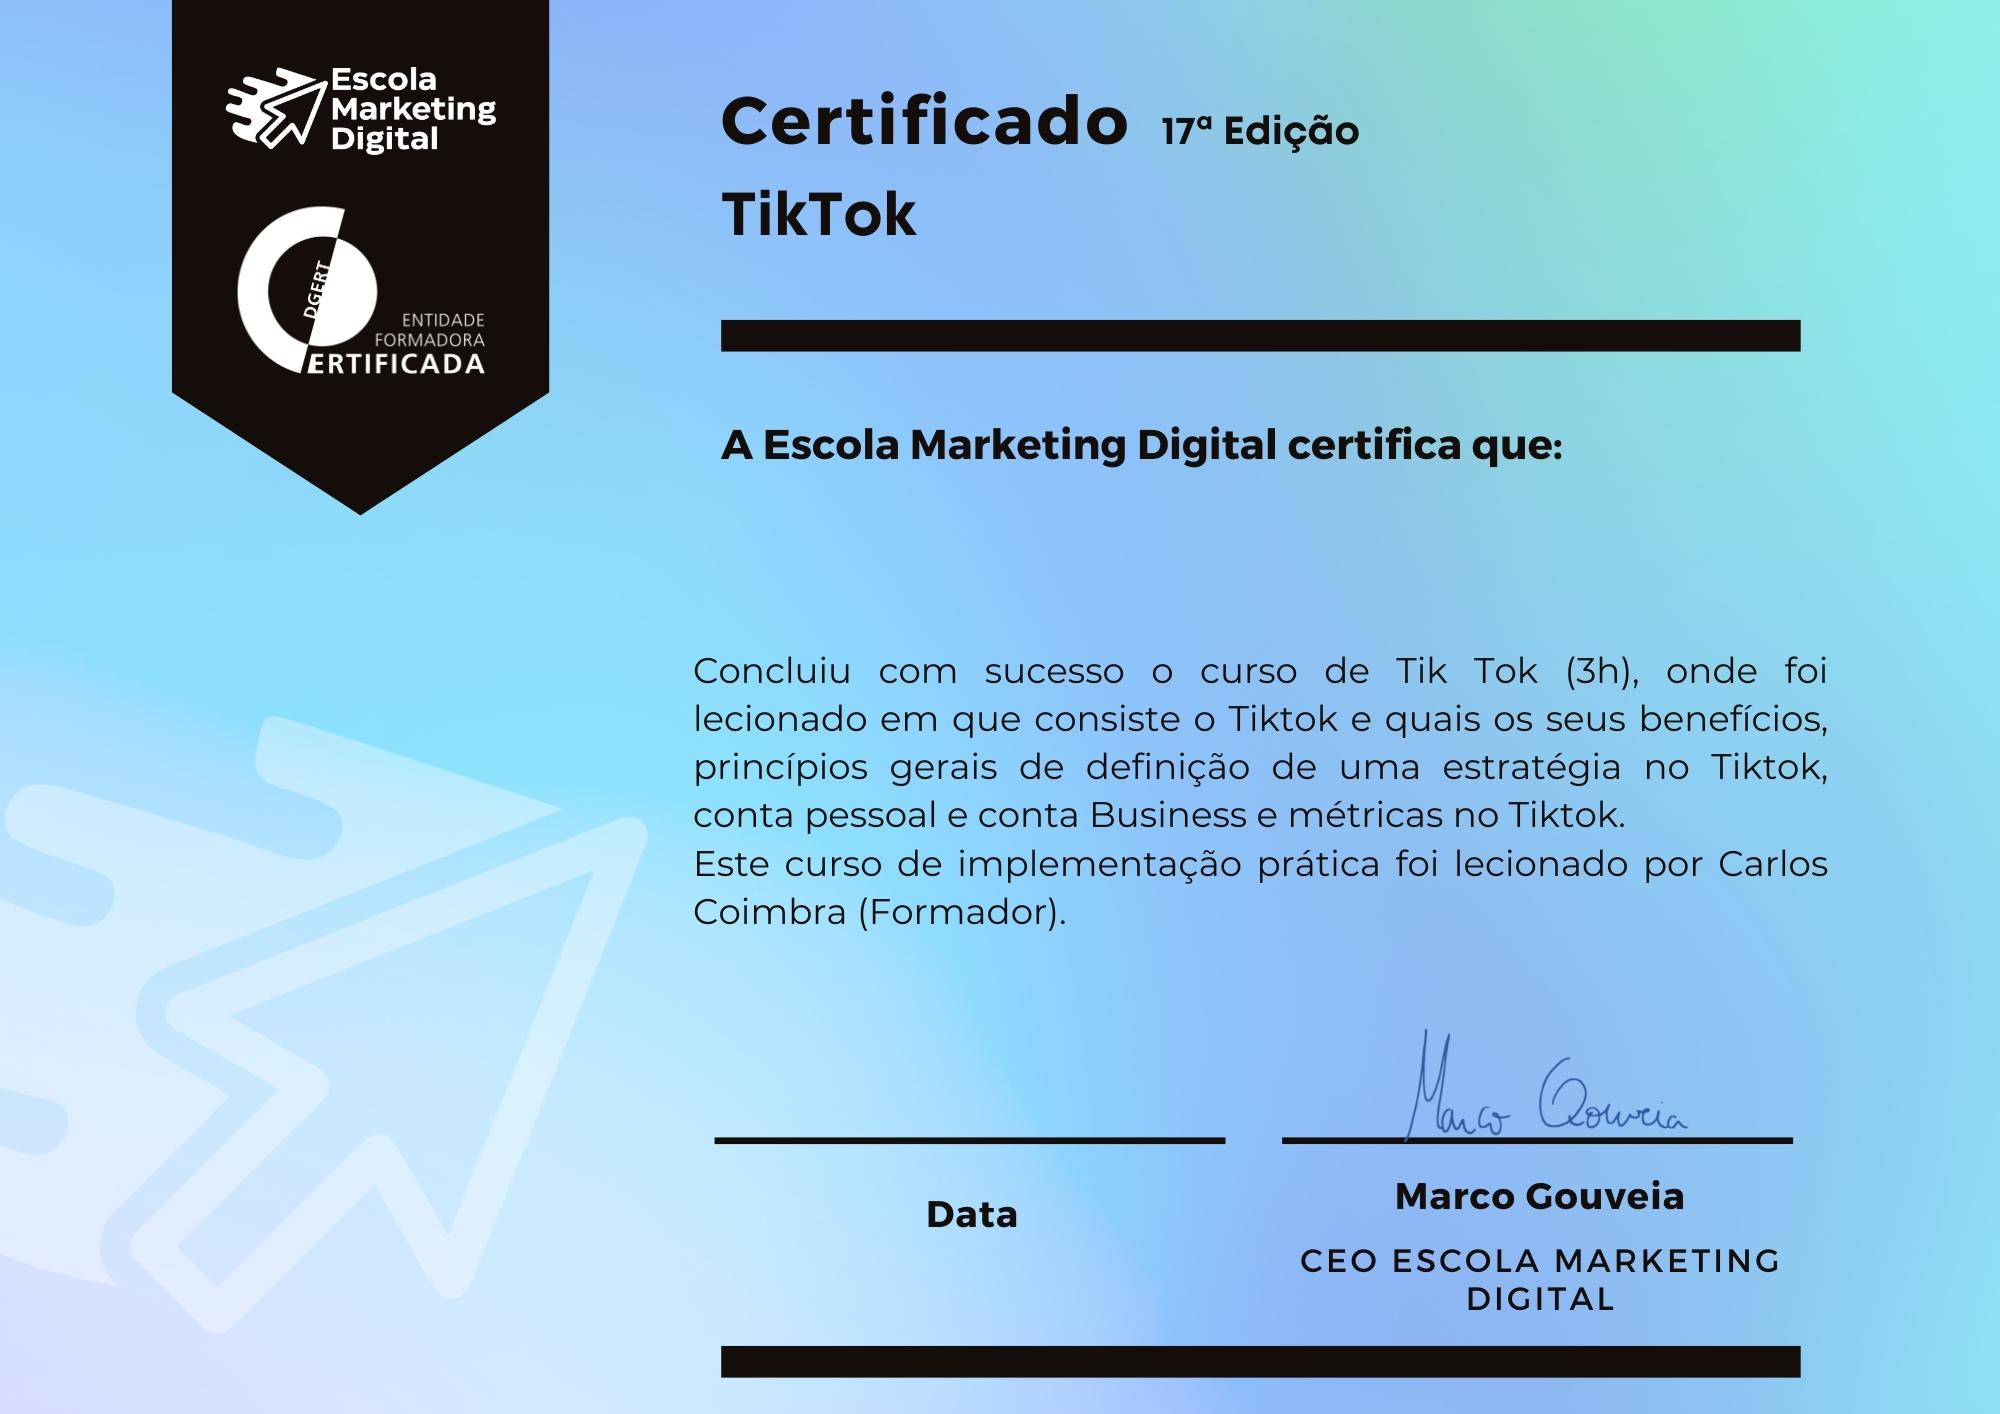 certificado tik tok 17 edicao escola marketing digital